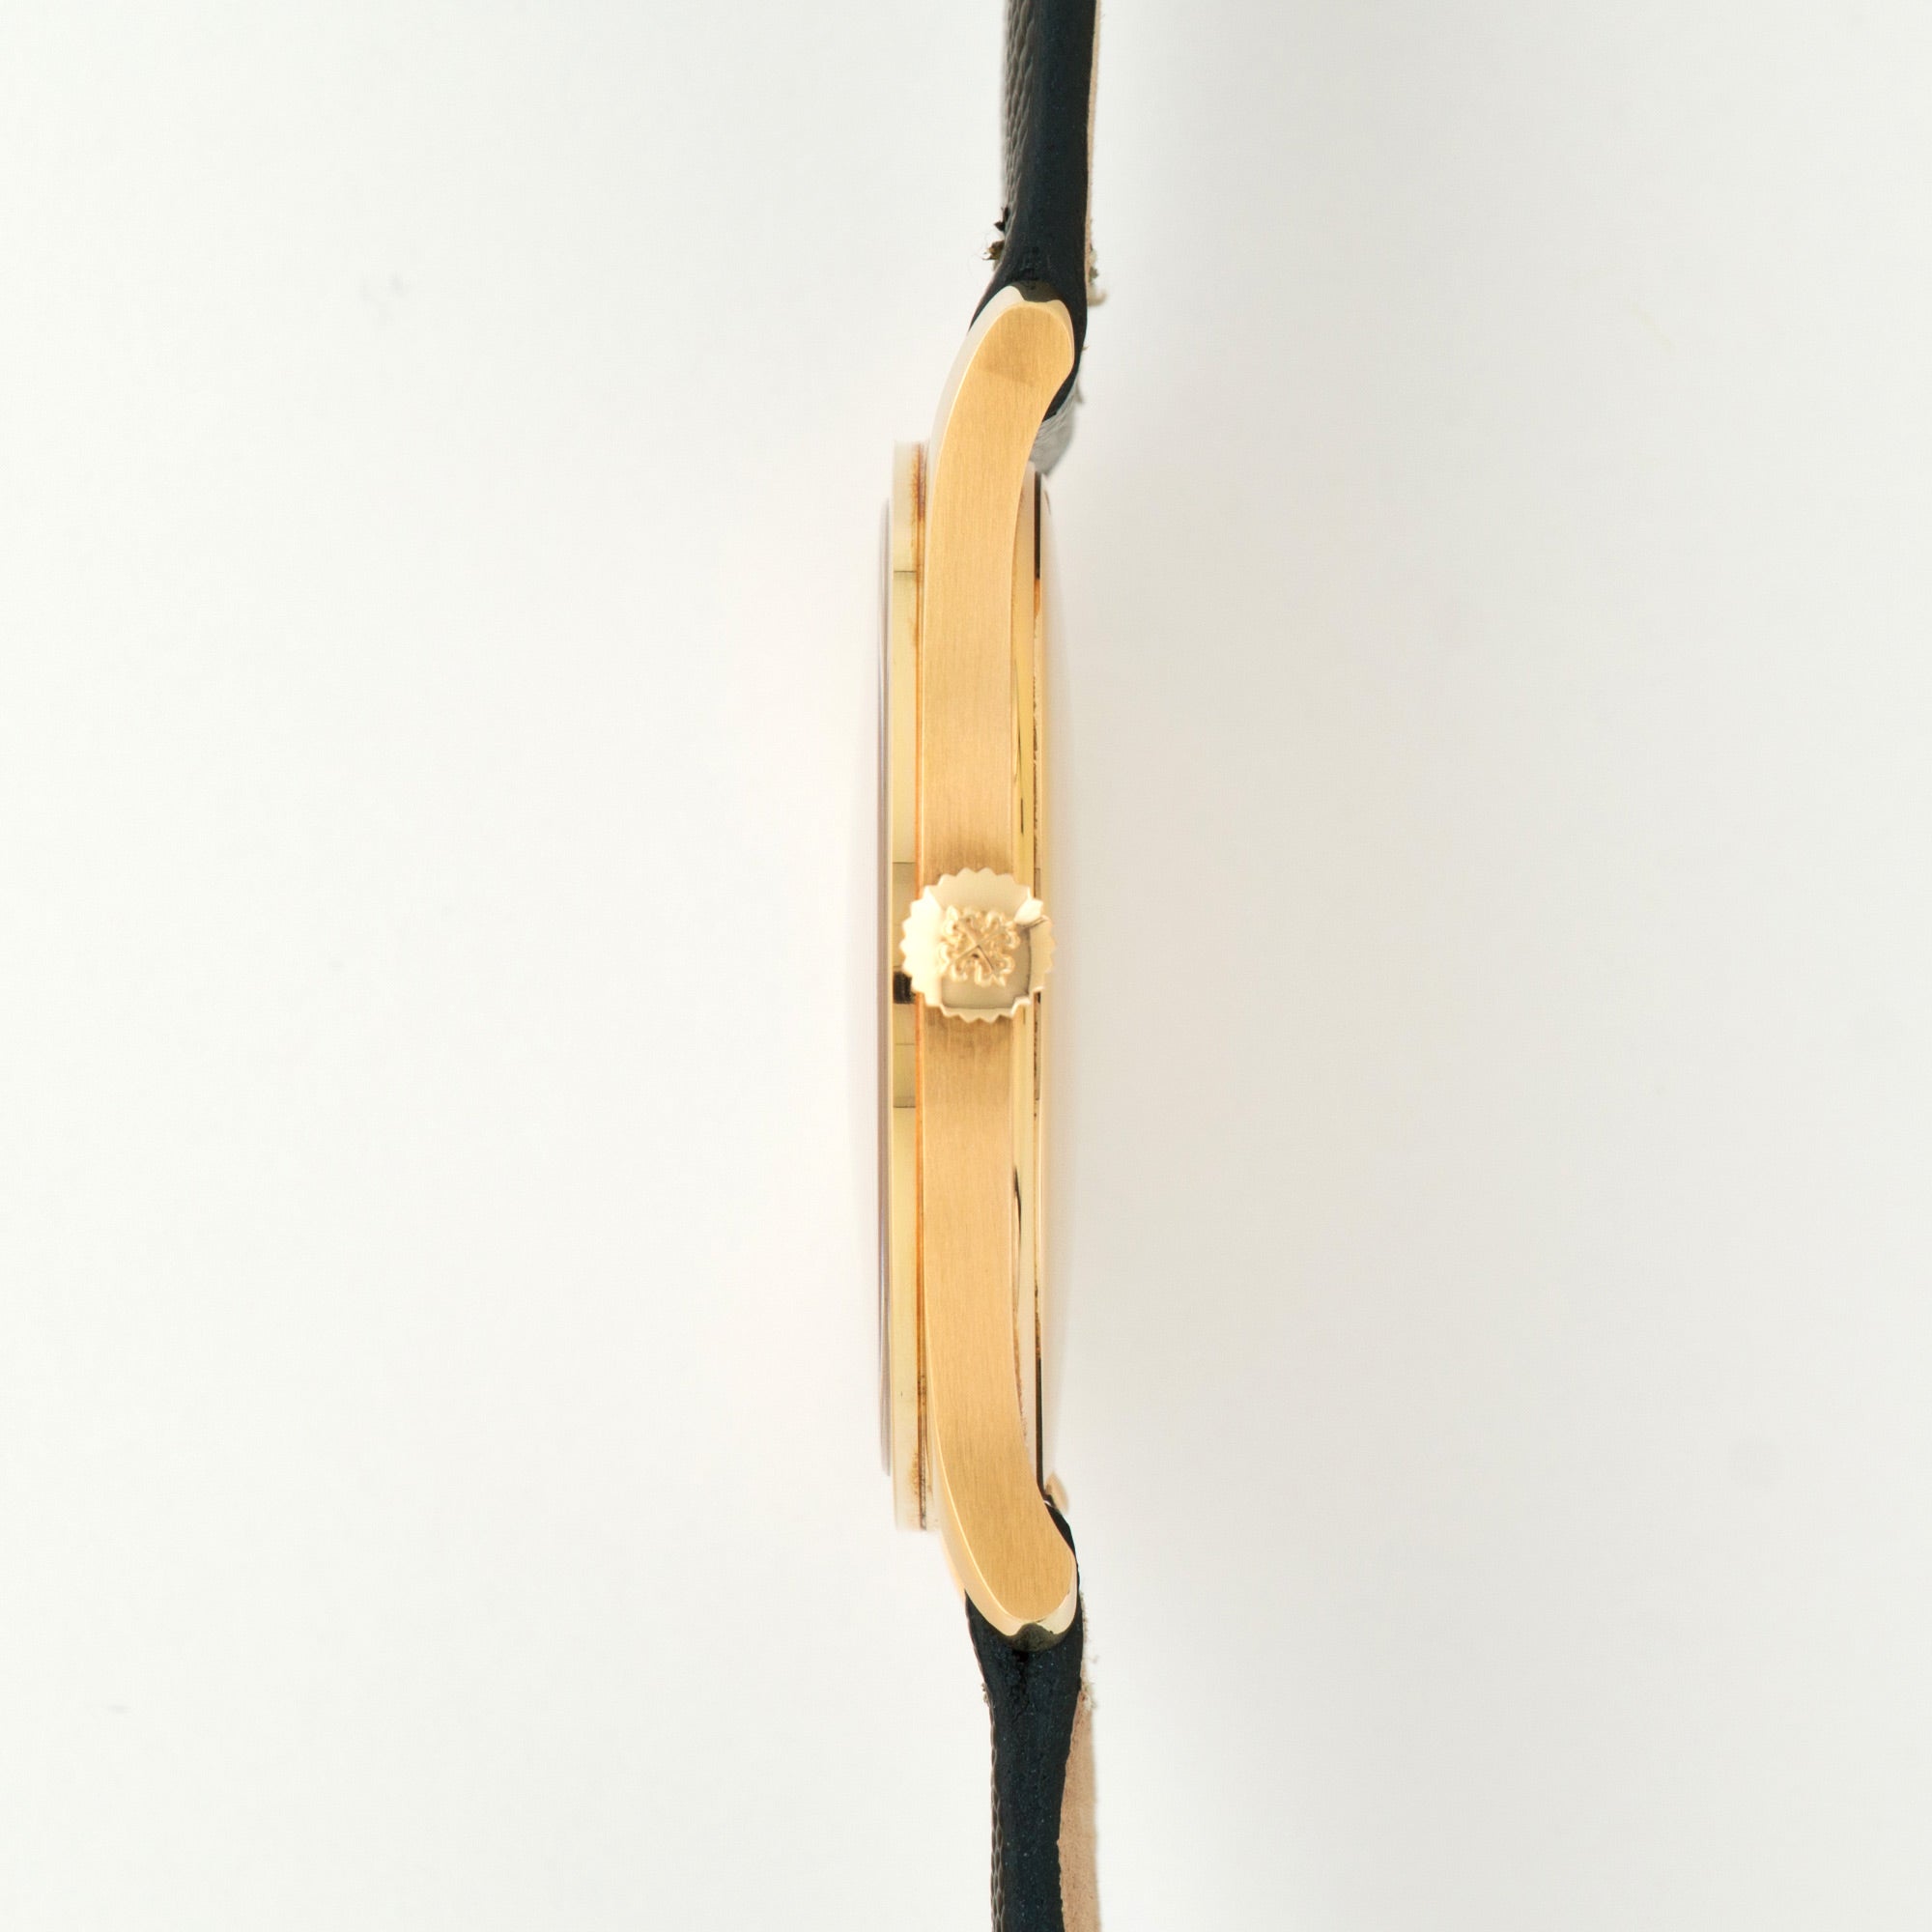 Patek Philippe - Patek Philippe Rose Gold Calatrava Watch Ref. 5196 - The Keystone Watches